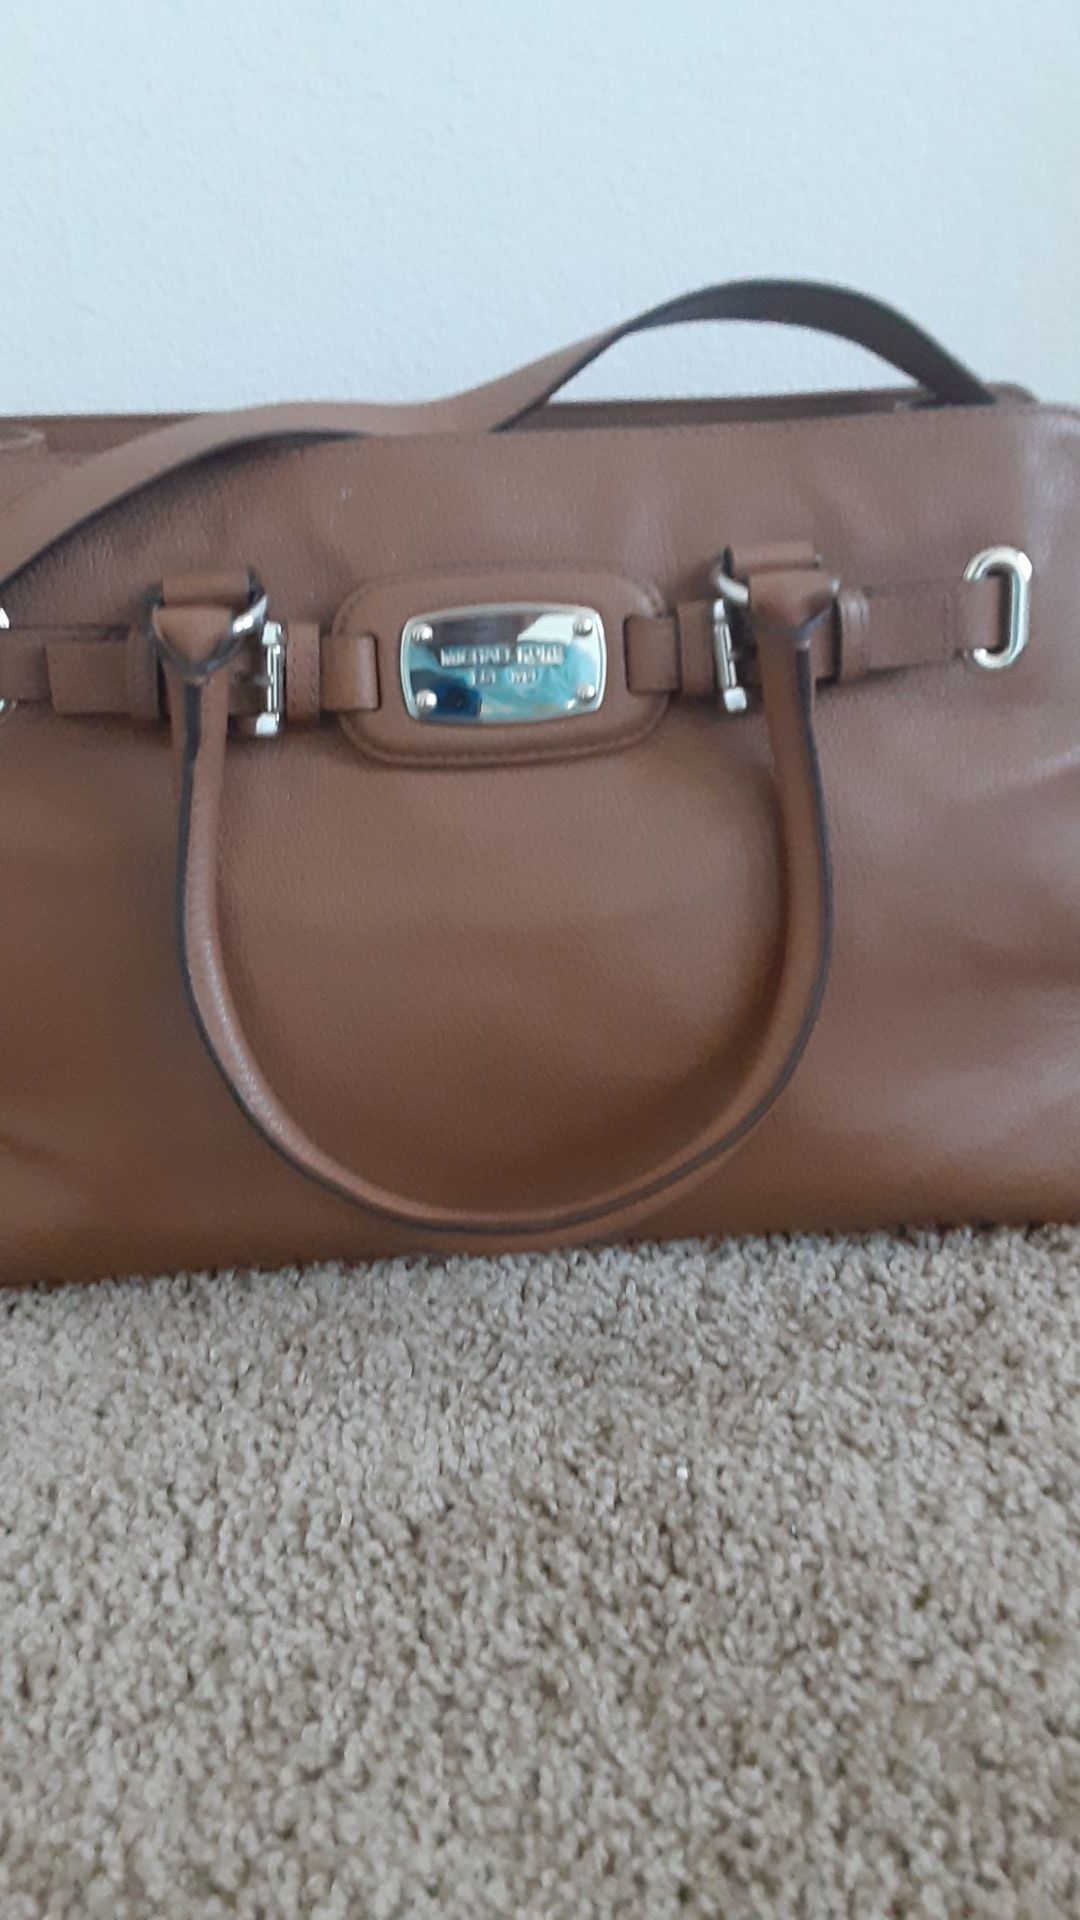 MK purse